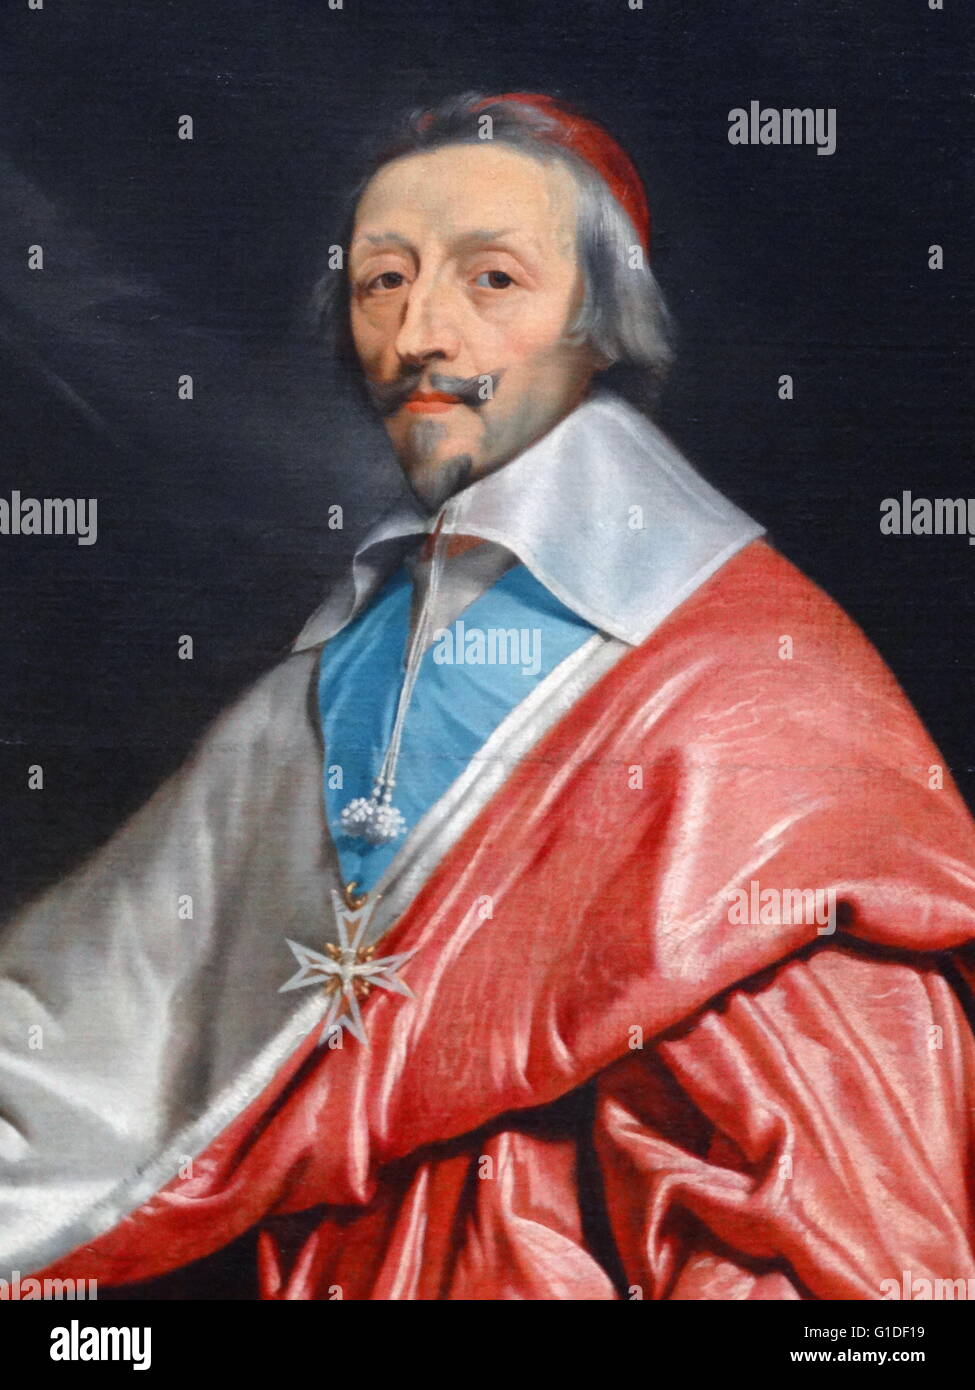 Cardinal de richelieu immagini e fotografie stock ad alta risoluzione -  Alamy